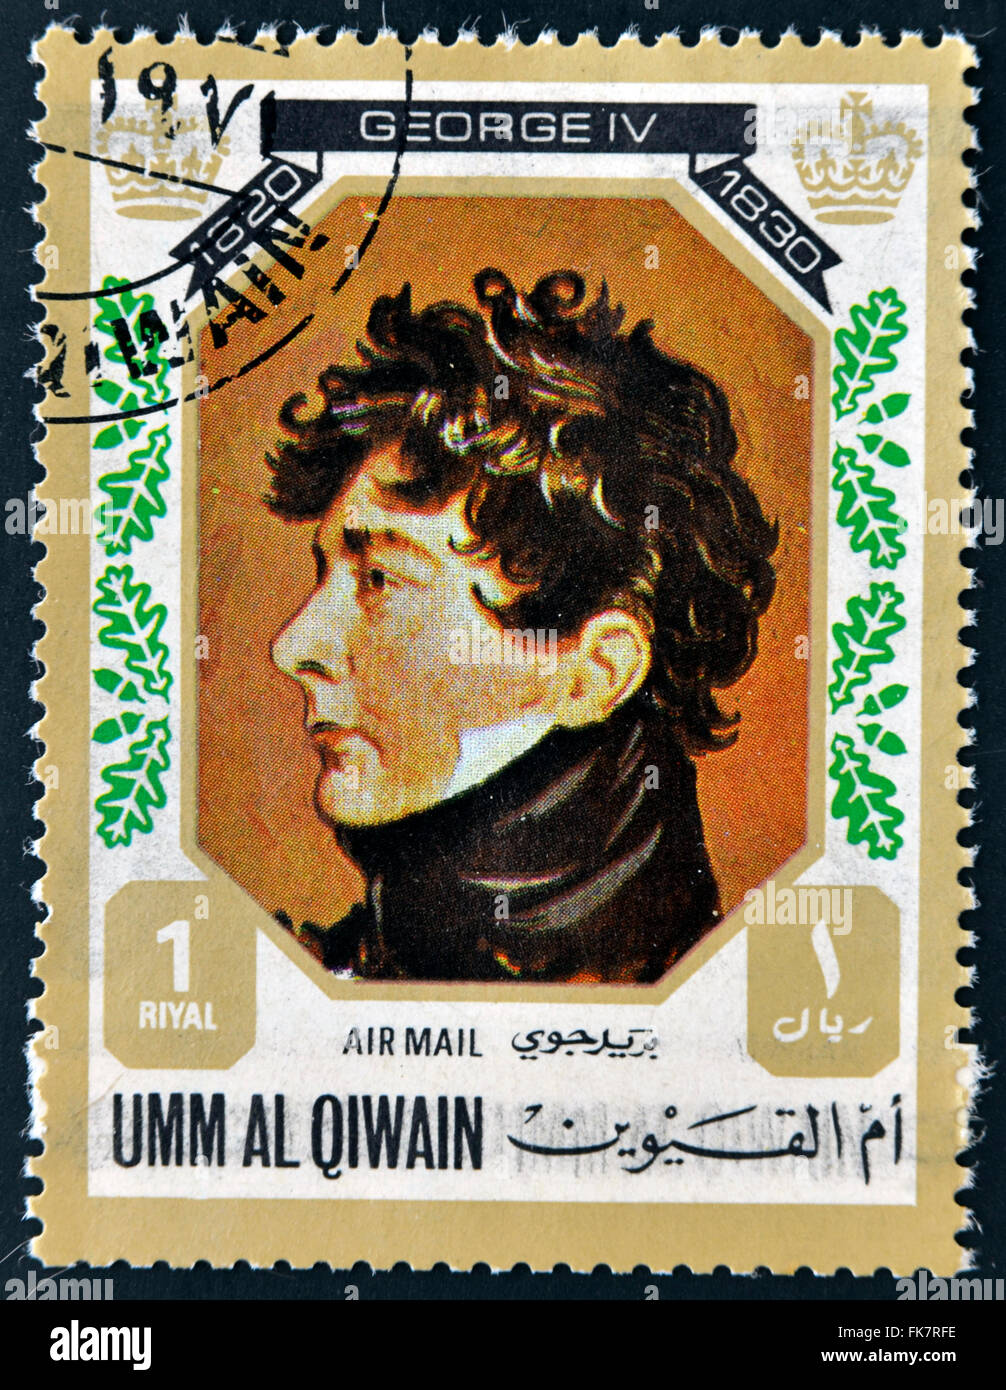 UMM AL QIWAIN - circa 1980 : timbre imprimé à Umm Al Qiwain montre le roi George IV, vers 1980 Banque D'Images